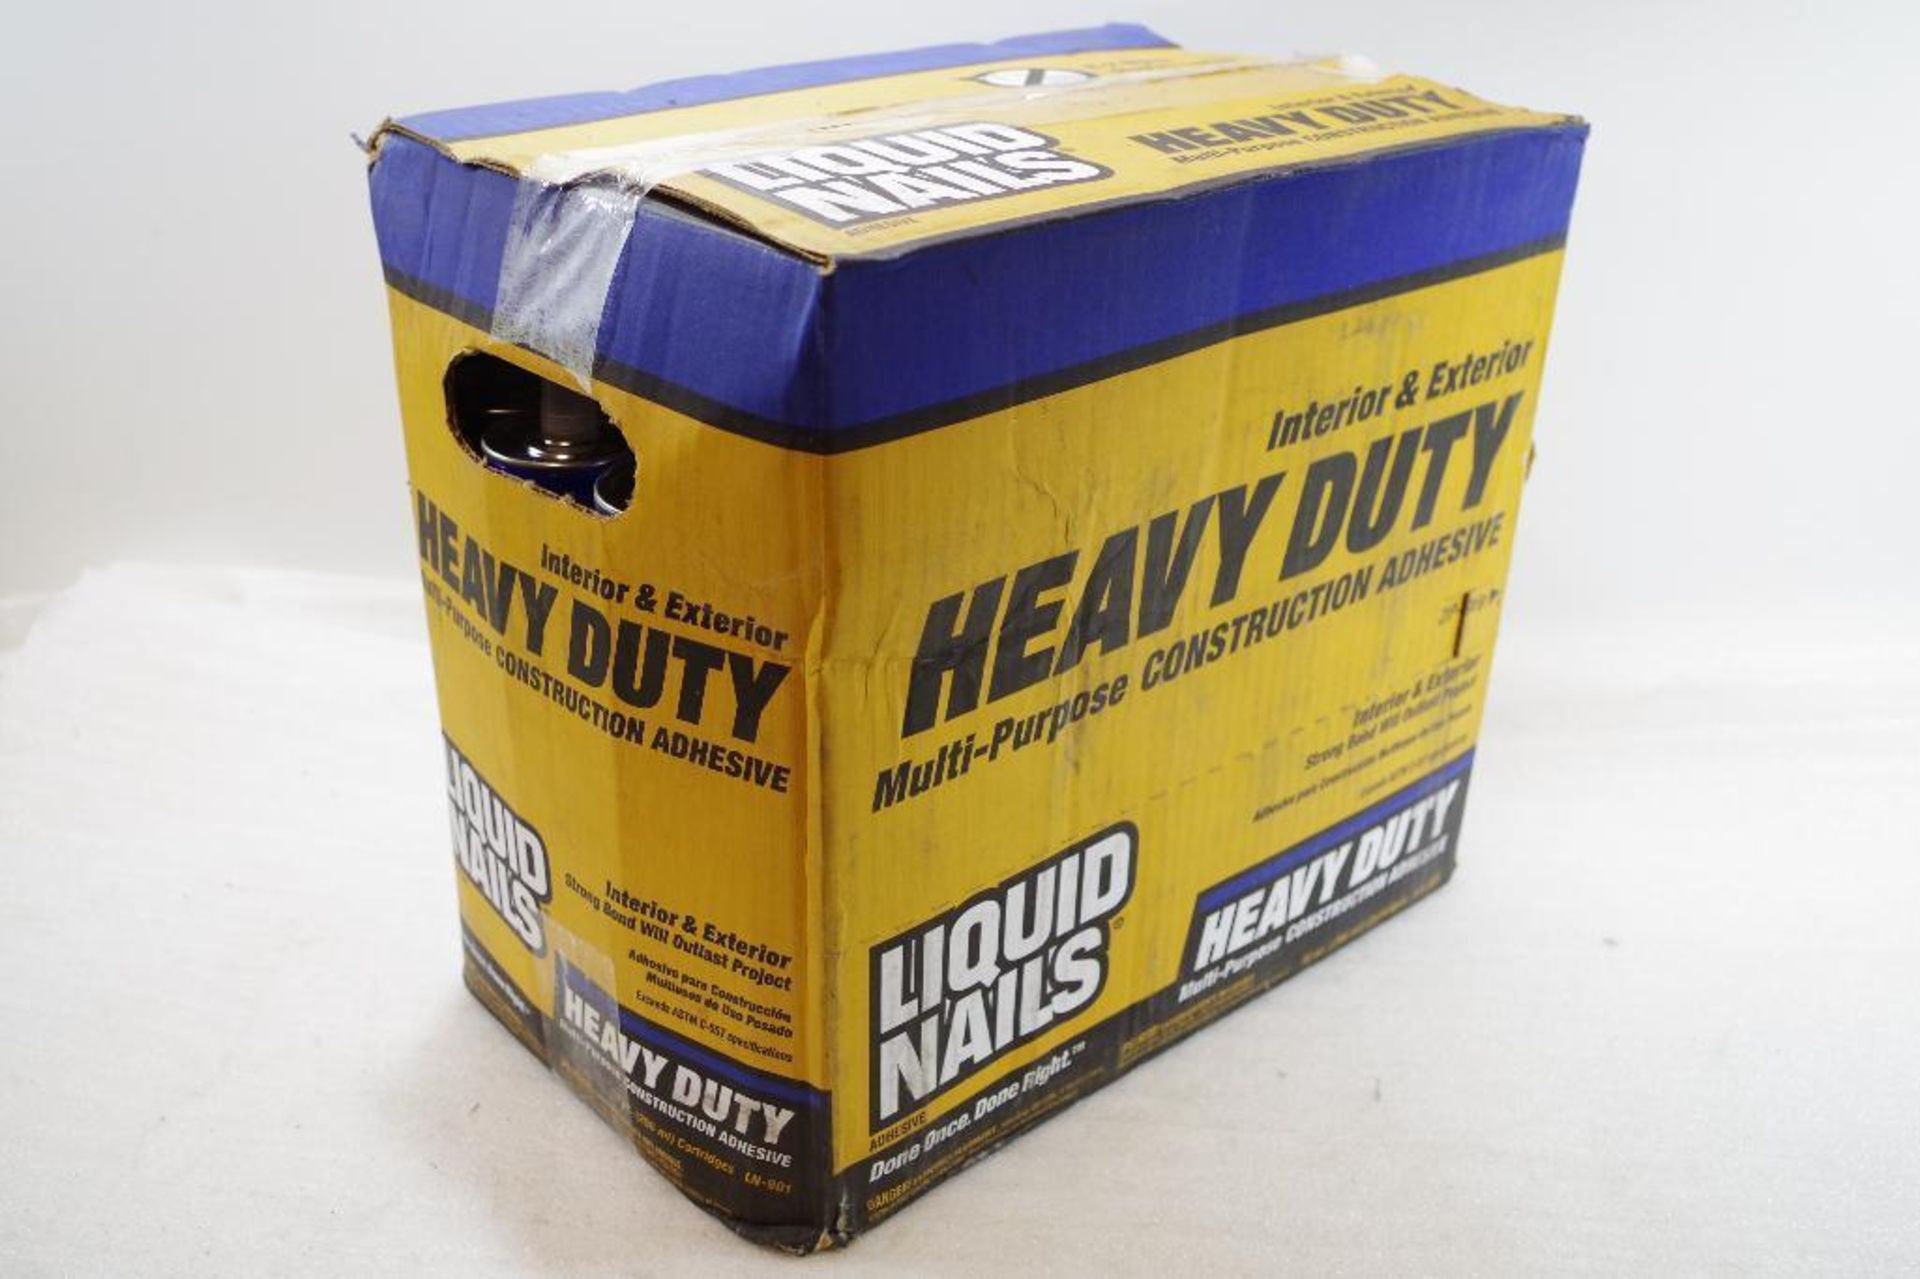 [24] LIQUID NAILS Heavy Duty Multi-Purpose Construction Adhesive (1 Box of 24) - Image 2 of 5